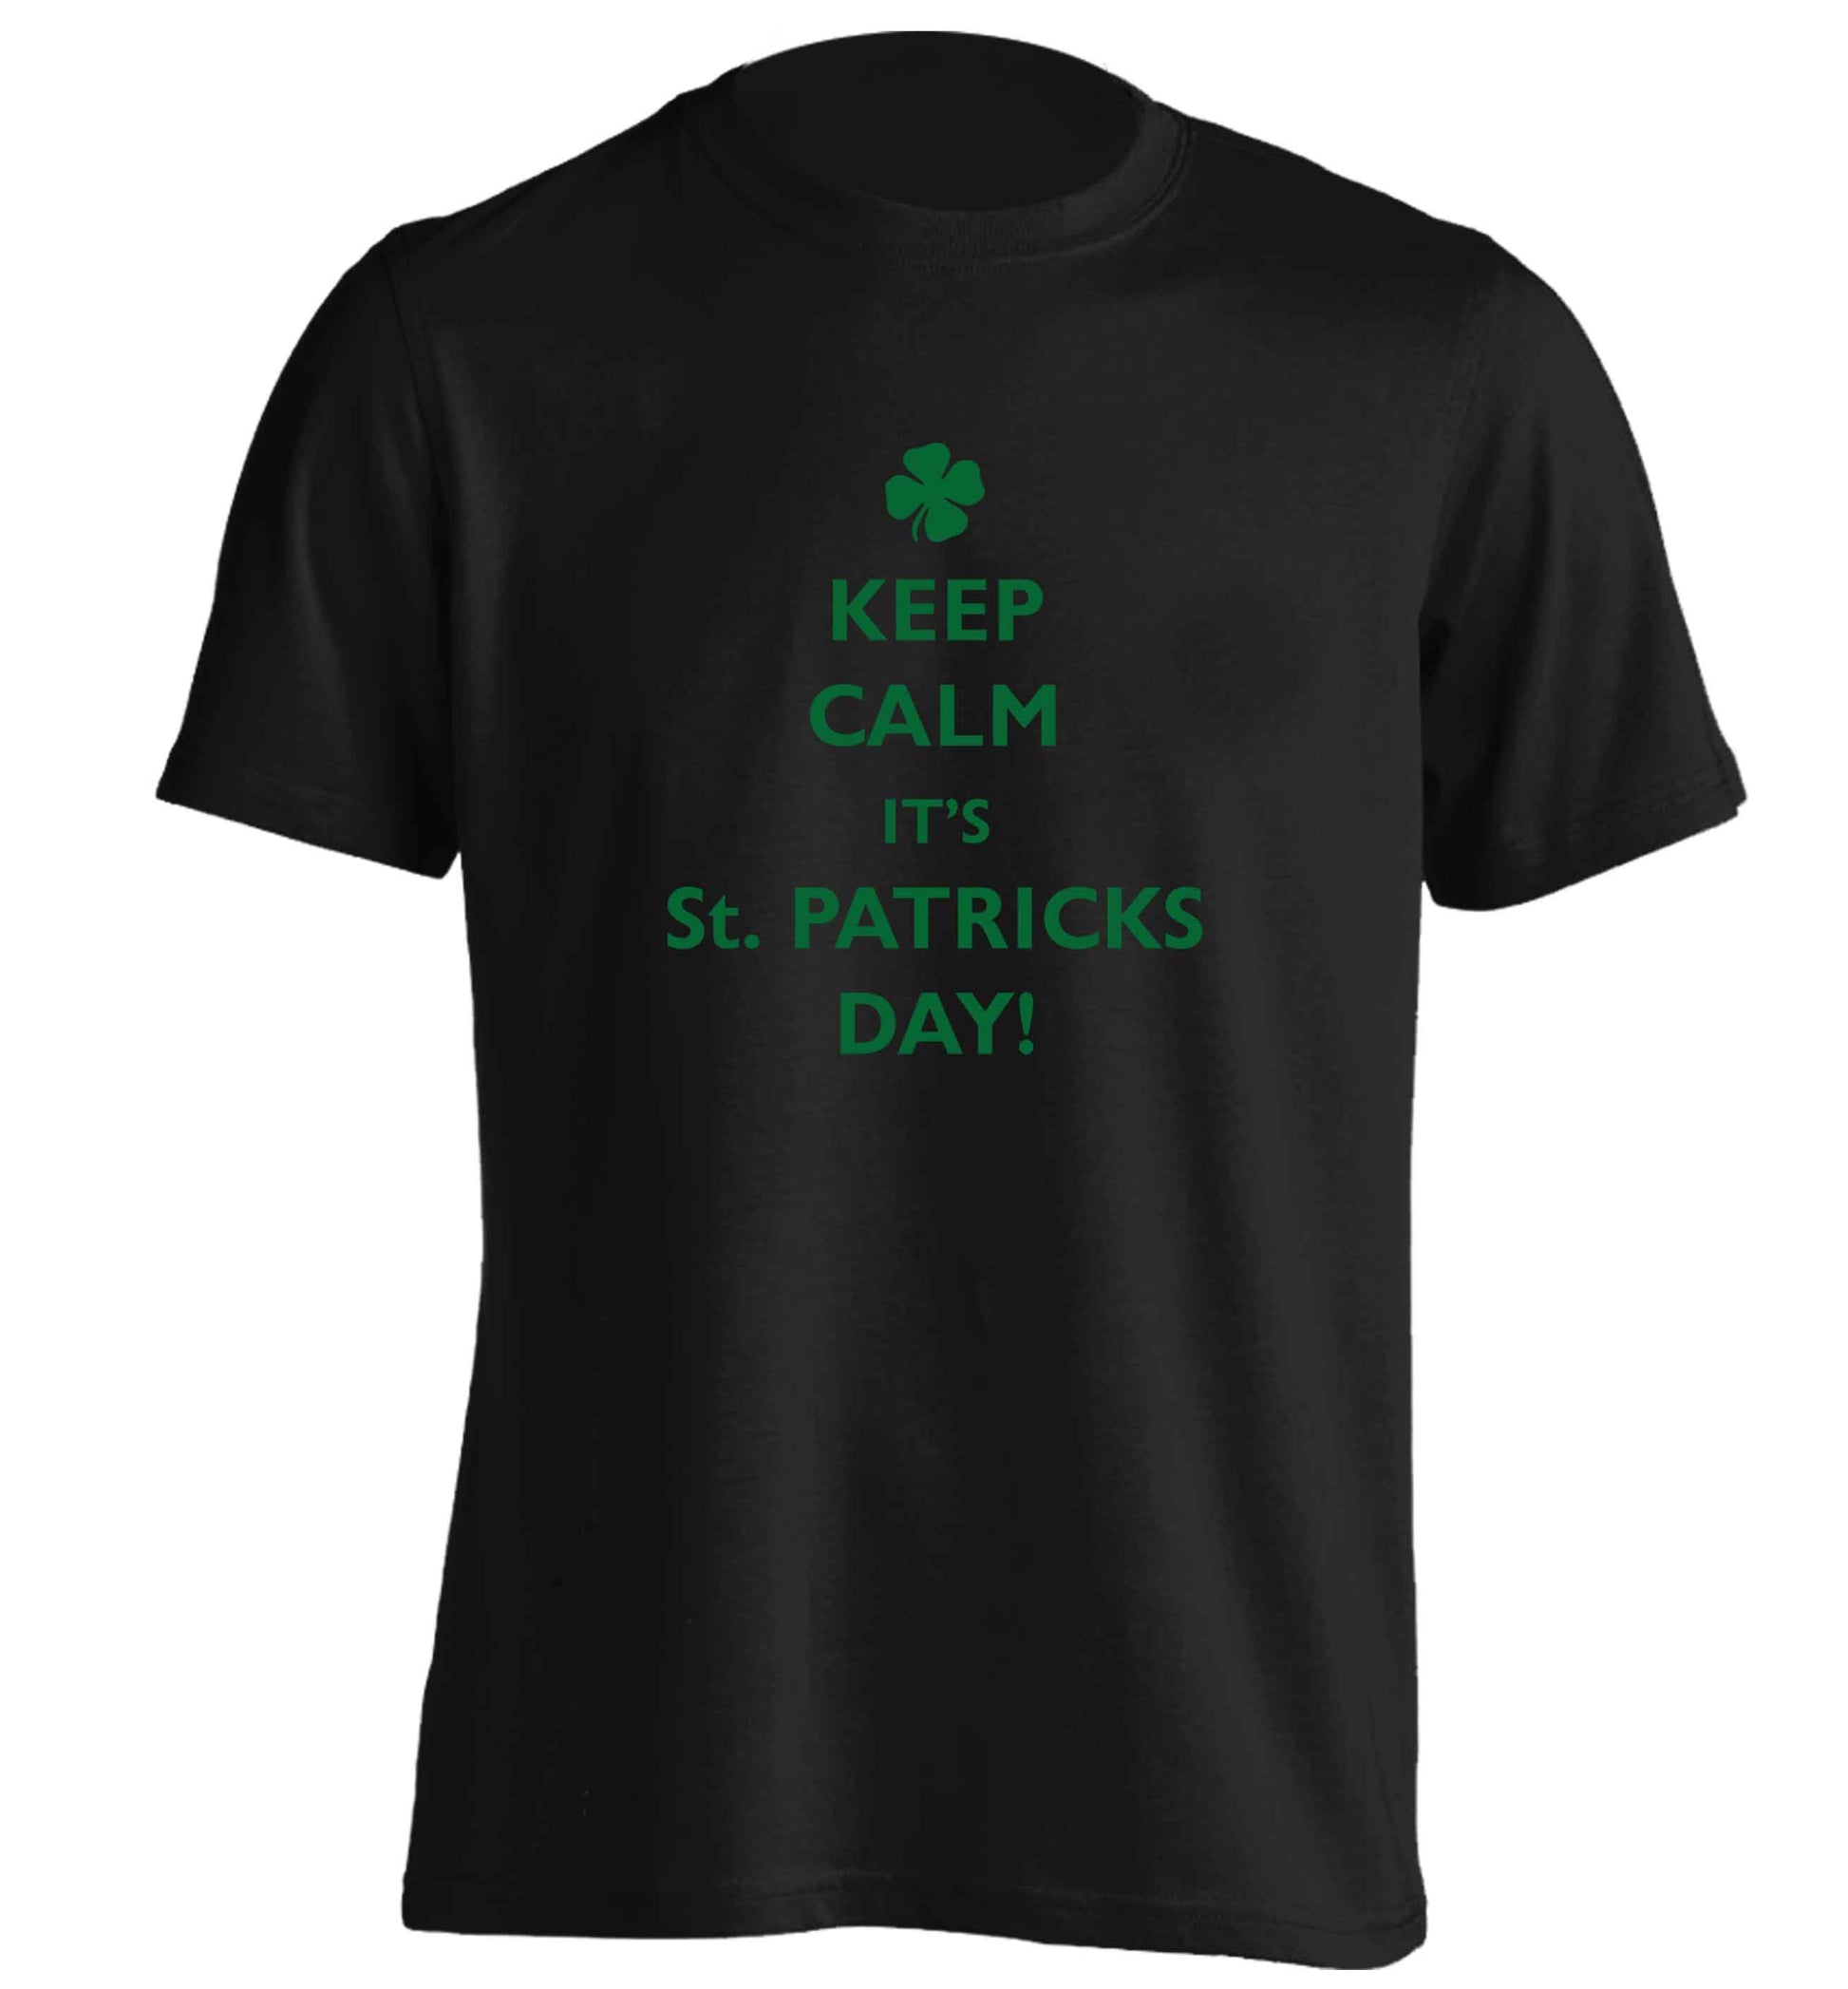 I can't keep calm it's St.Patricks day adults unisex black Tshirt 2XL